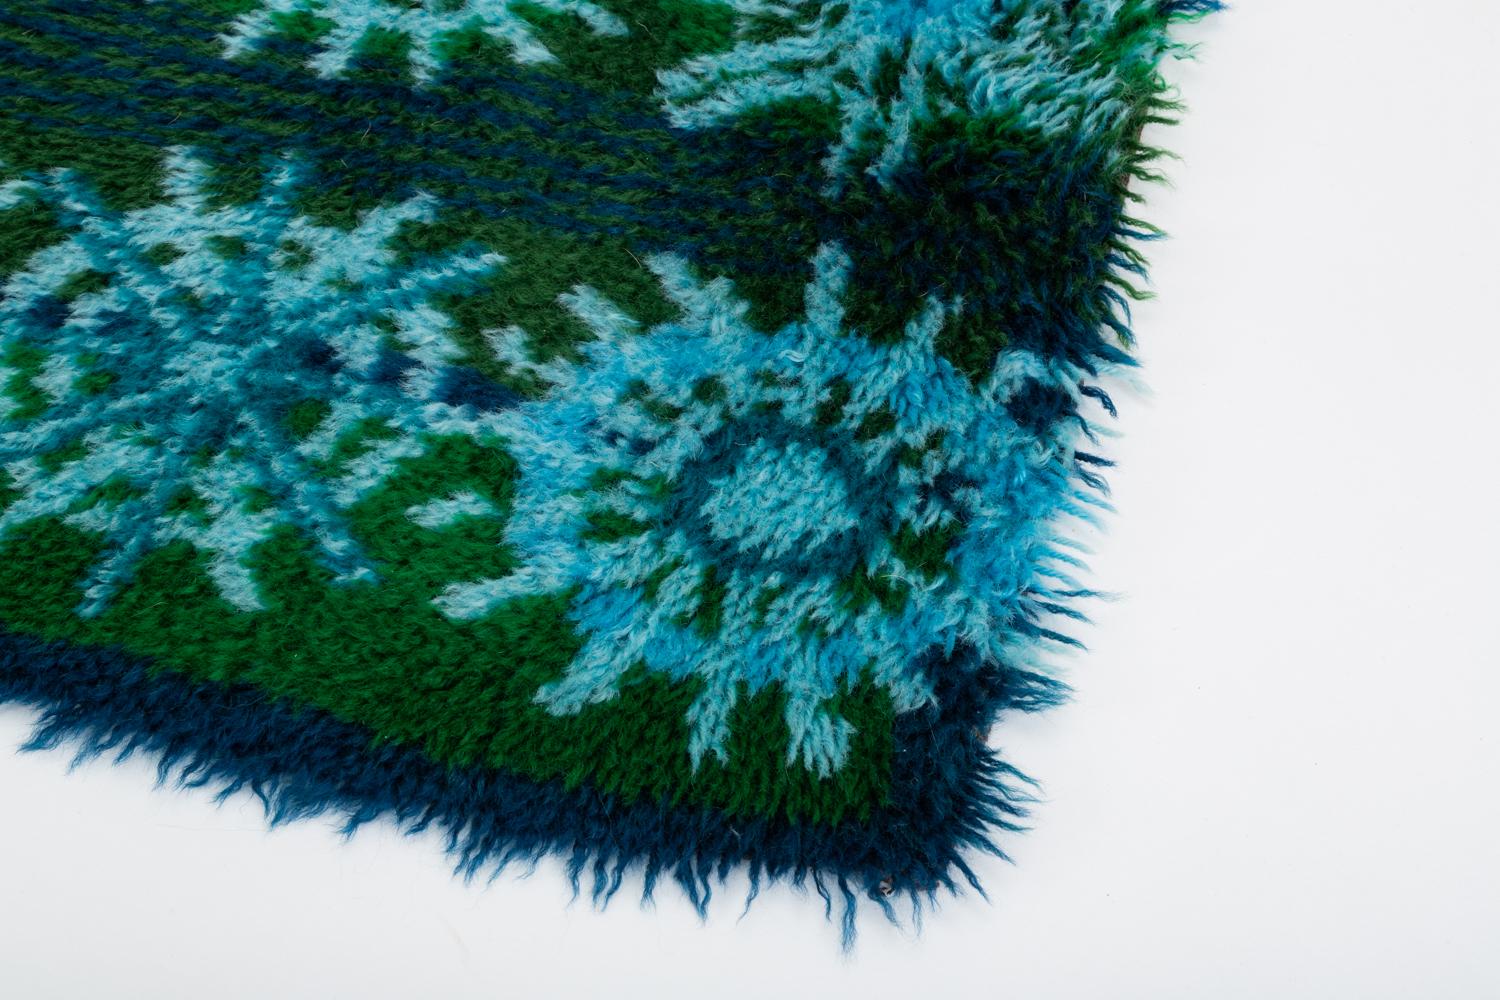 Woven Ege Rya Rug in “Blue Snowflake” Design